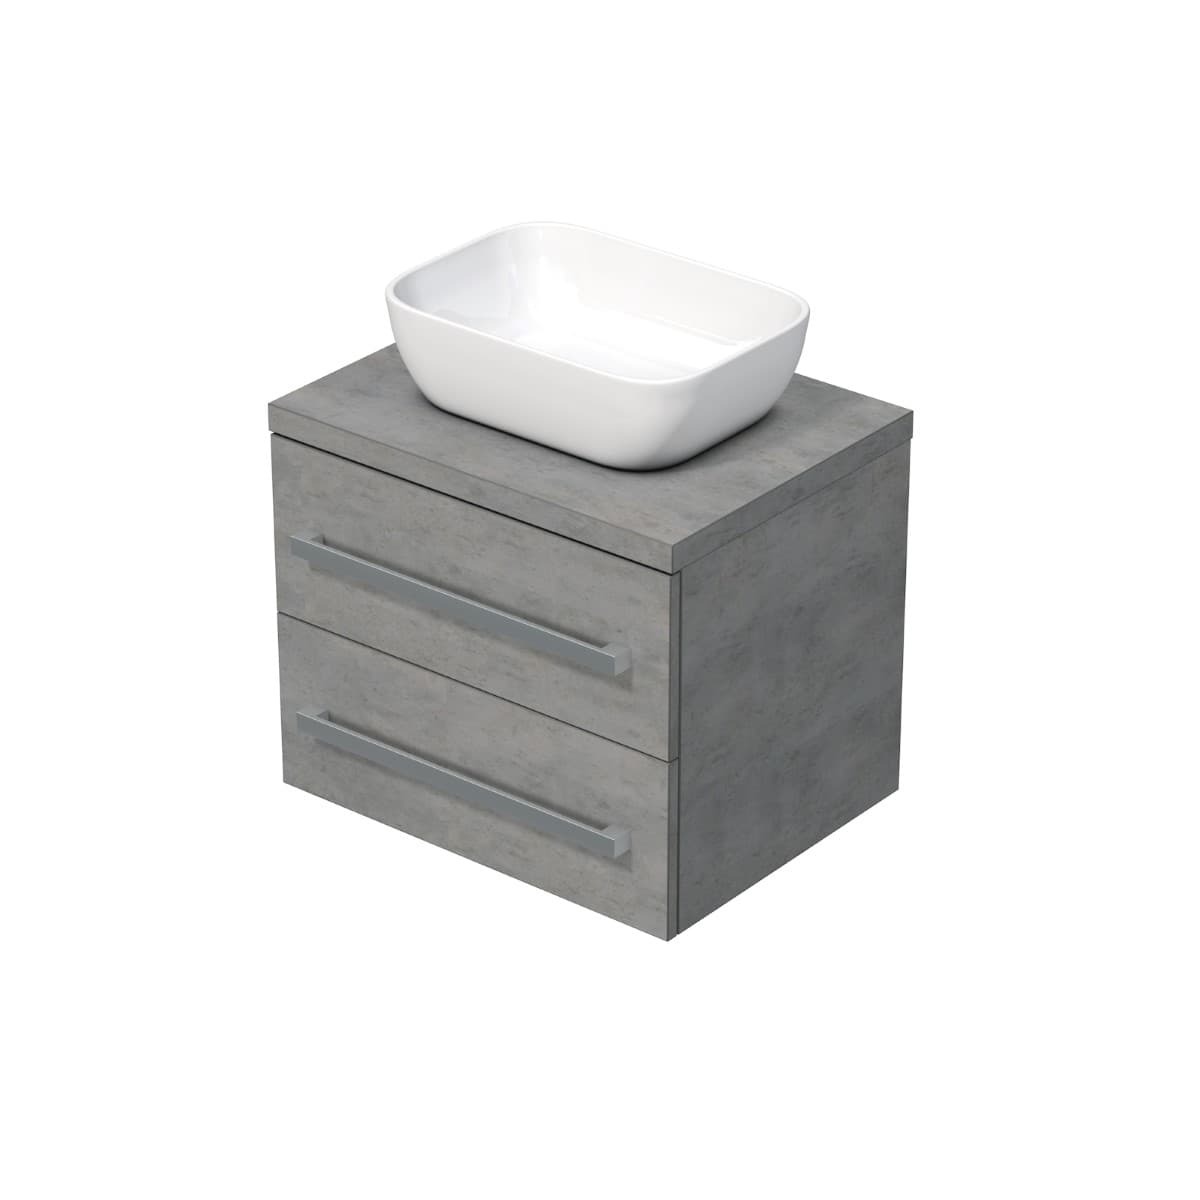 Koupelnová skříňka s krycí deskou Naturel Cube Way 60x53x46 cm beton mat CUBE461603BE45 Naturel